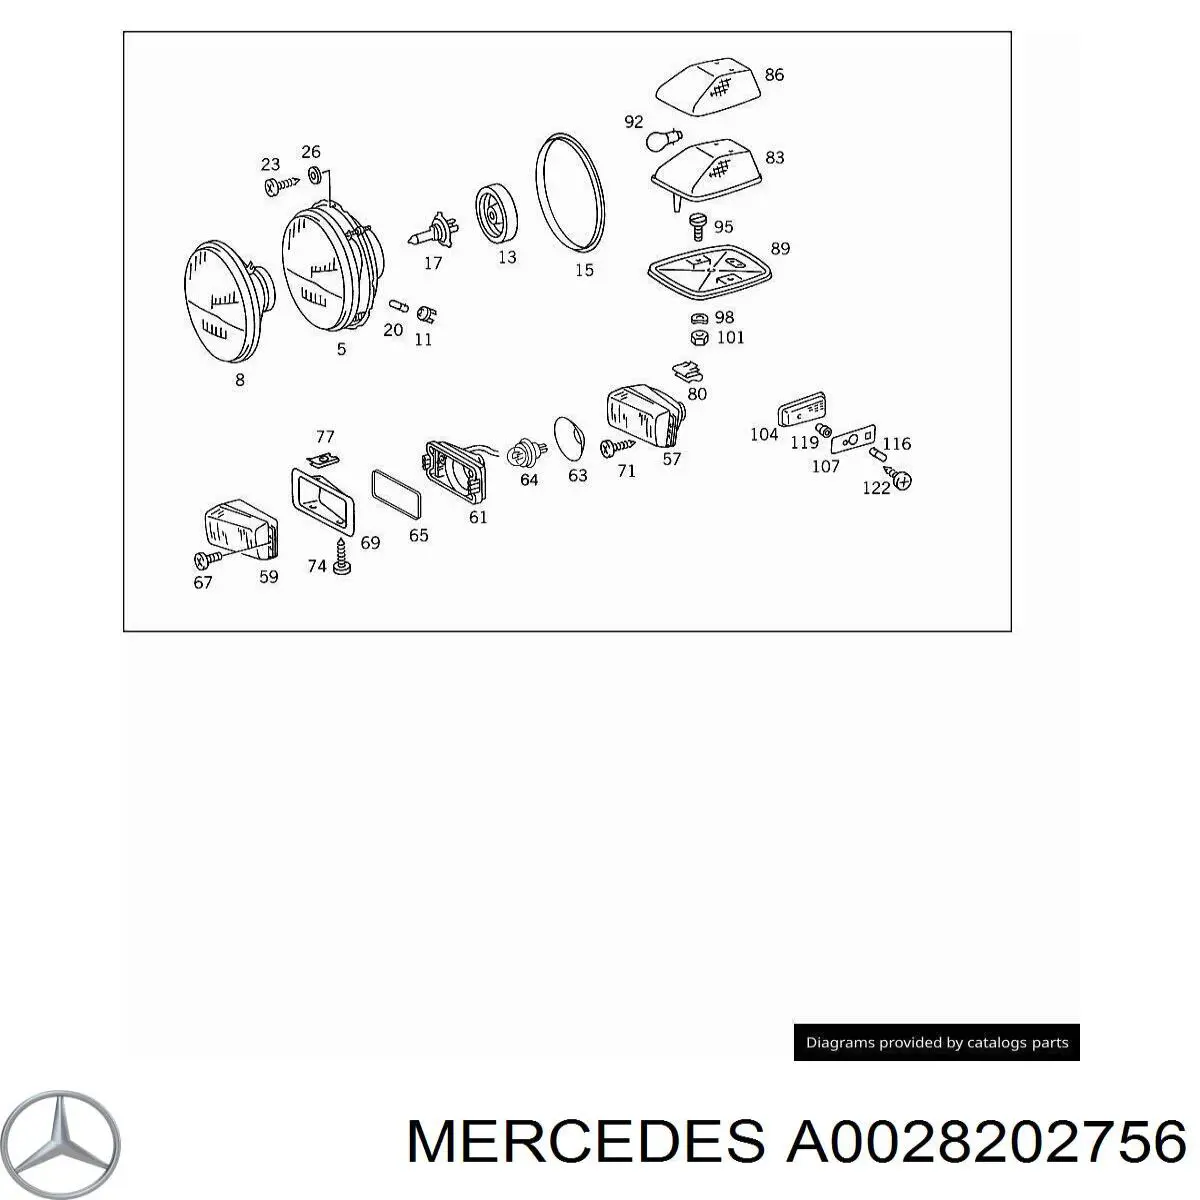 0028202756 Mercedes фара противотуманная левая